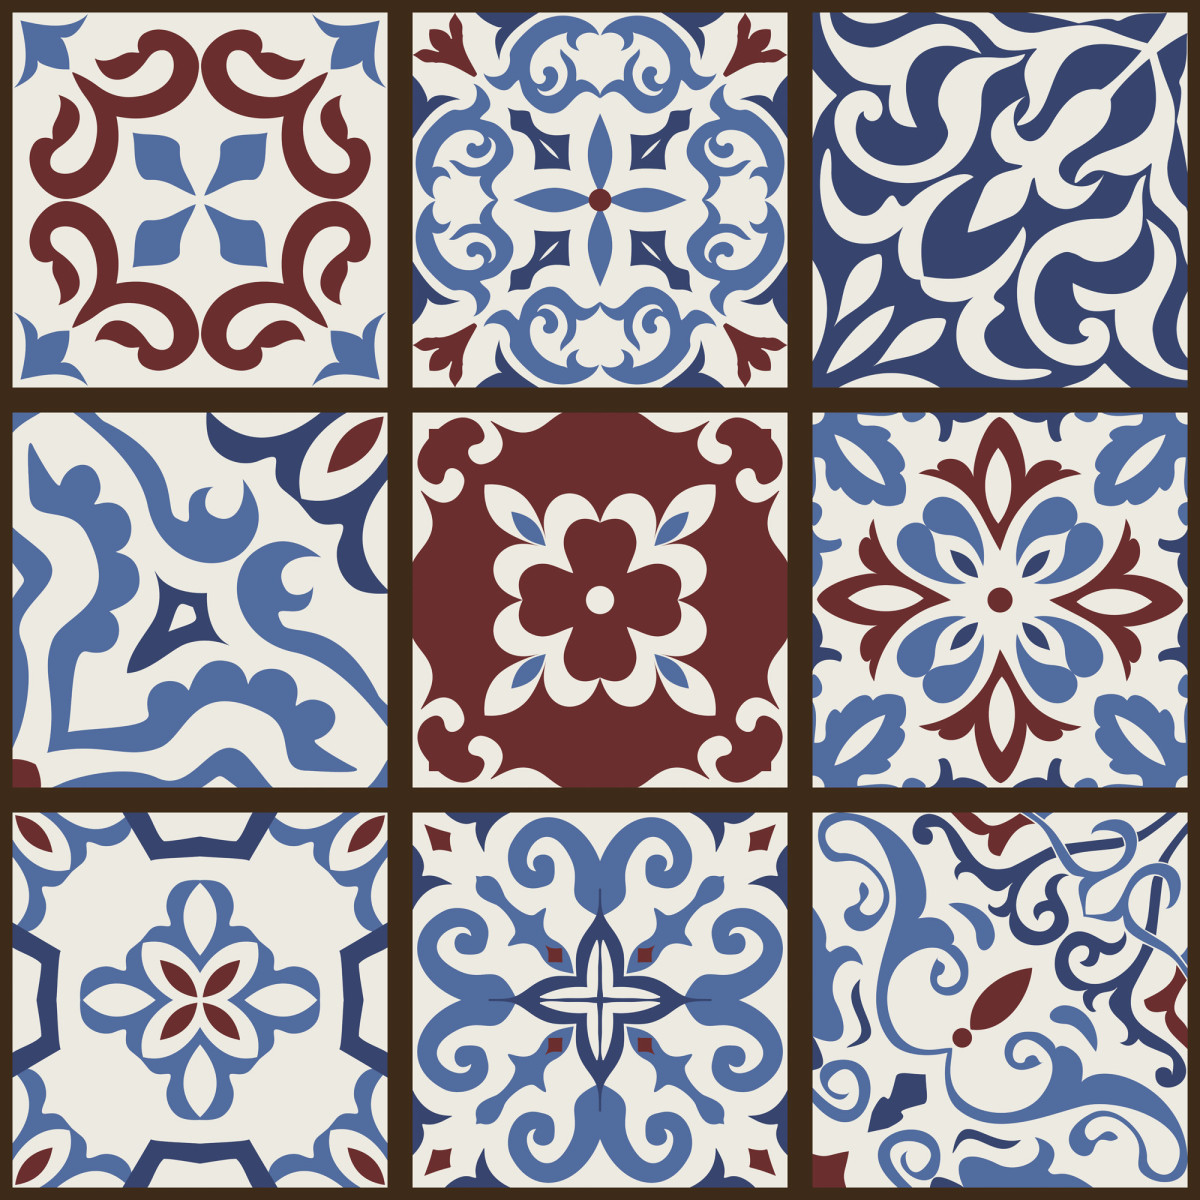 Flower motifs and crosses, encaustic tiles